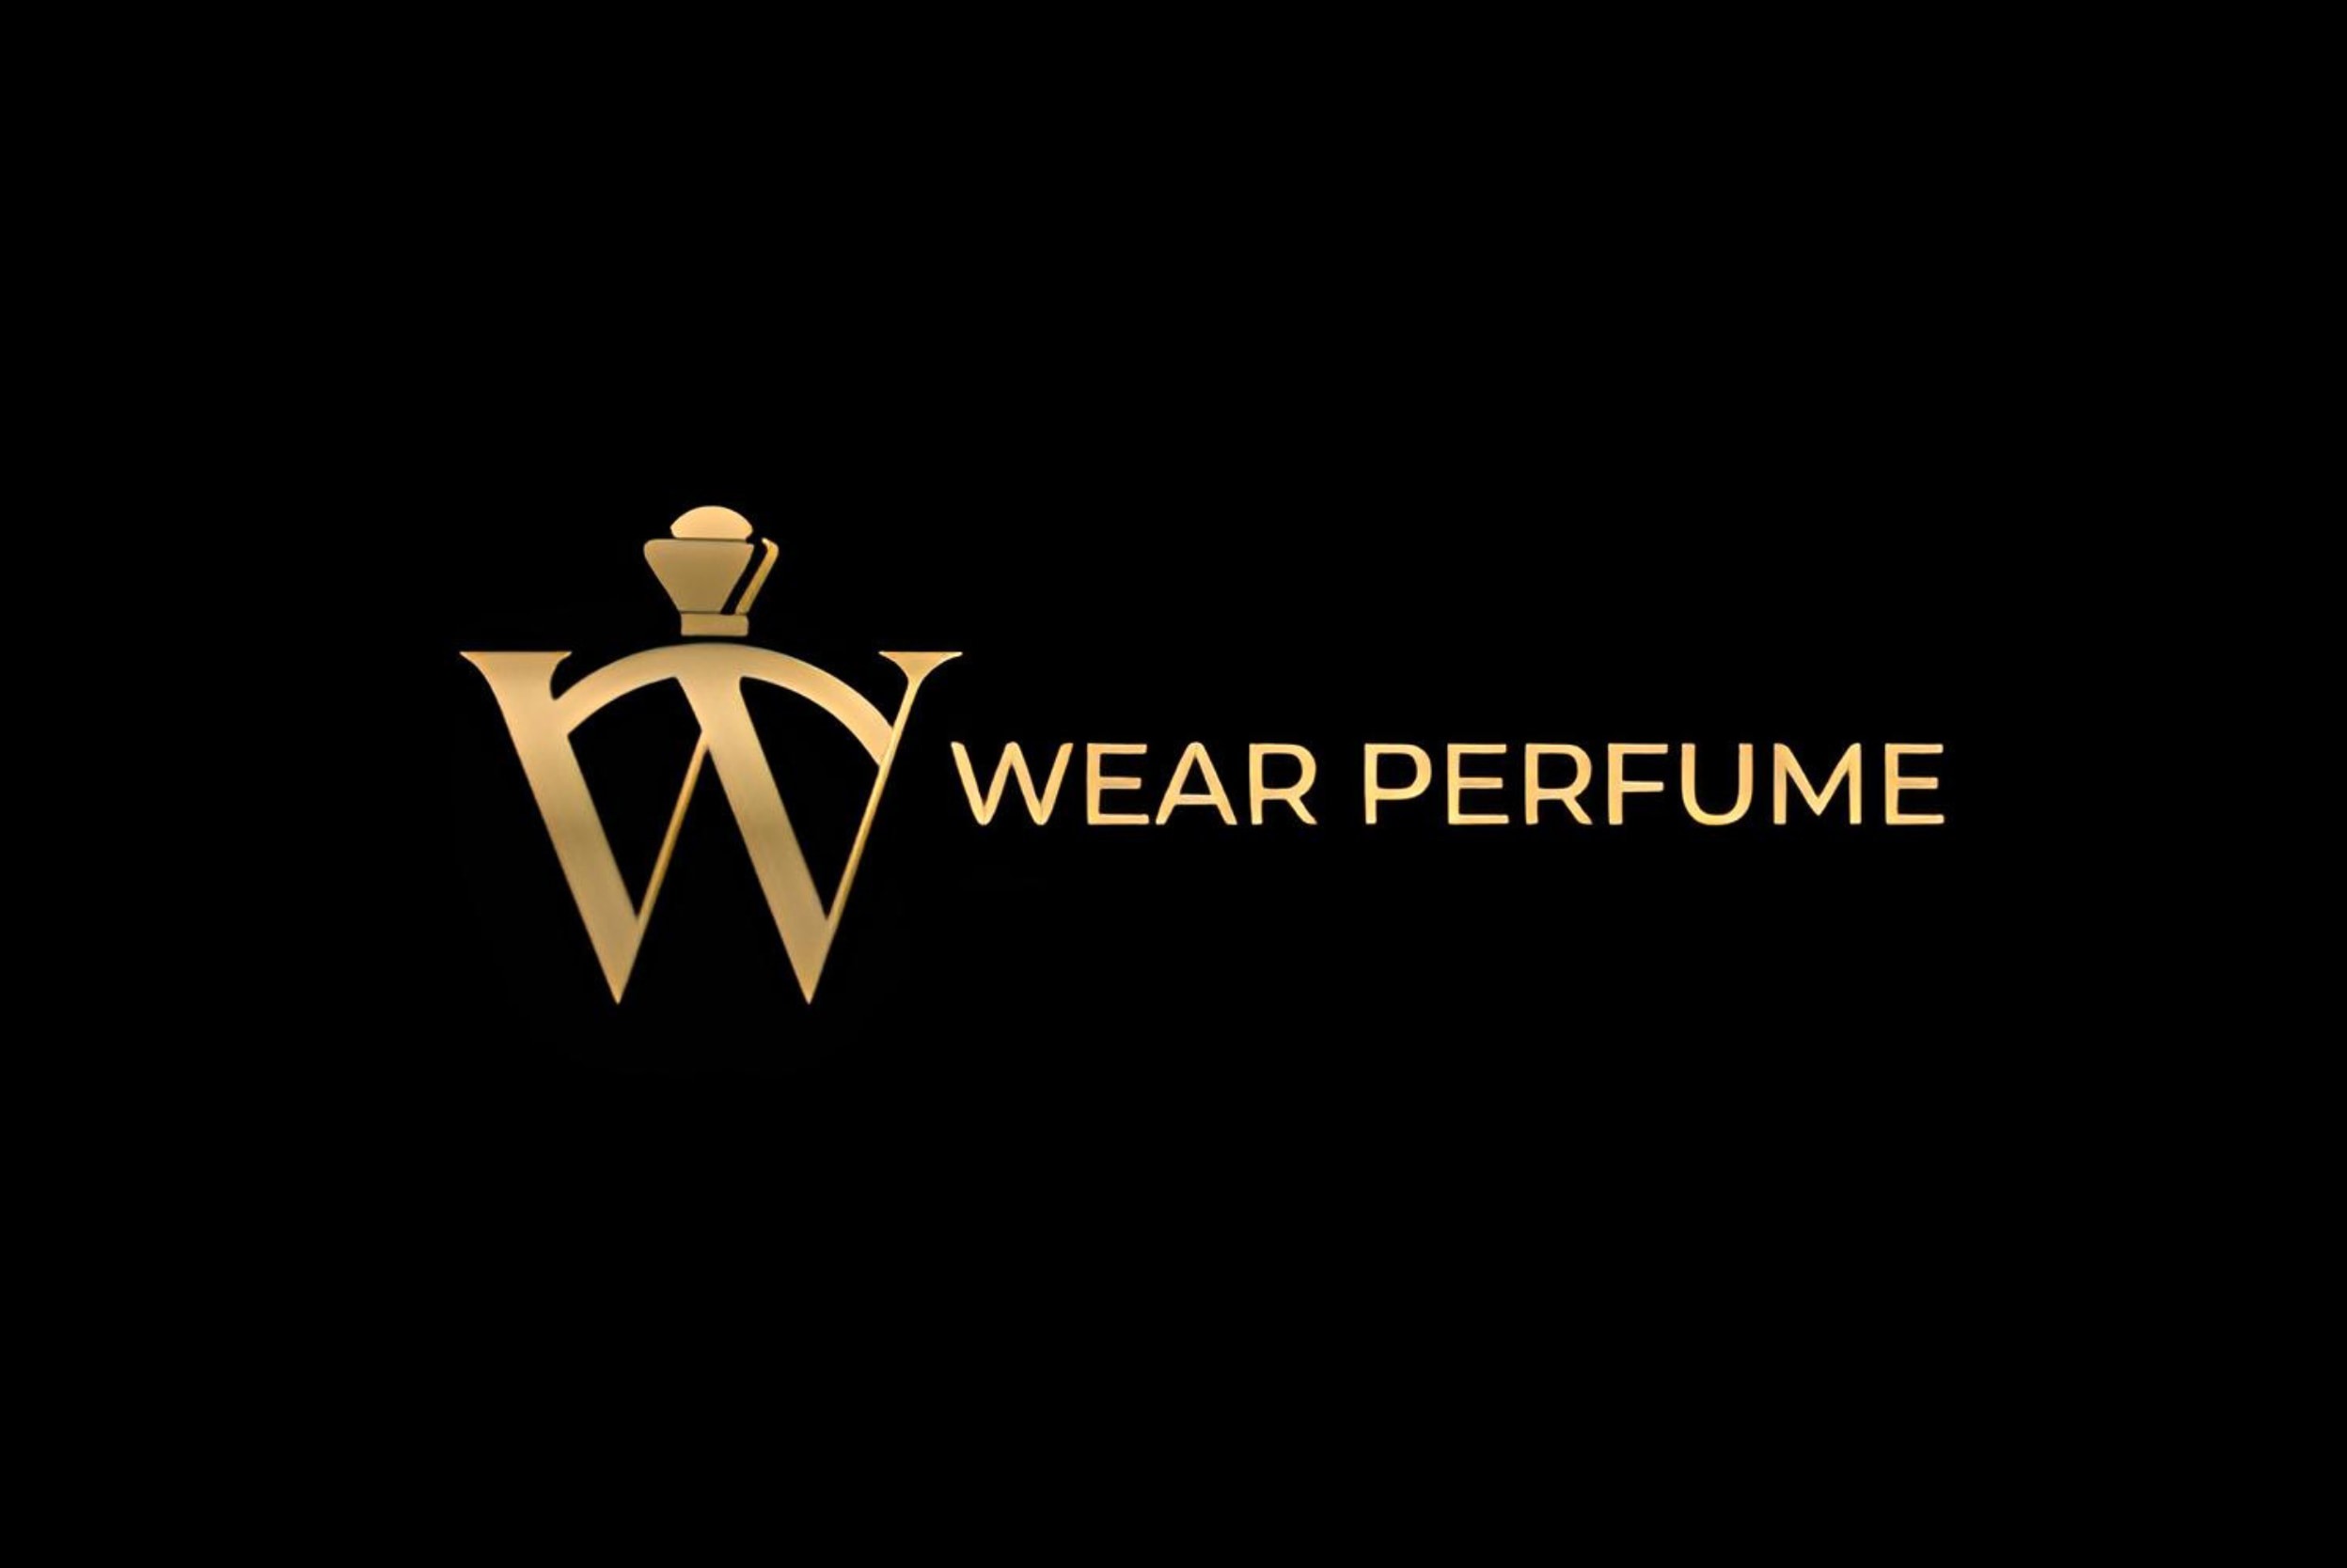 wear-perfume-logo